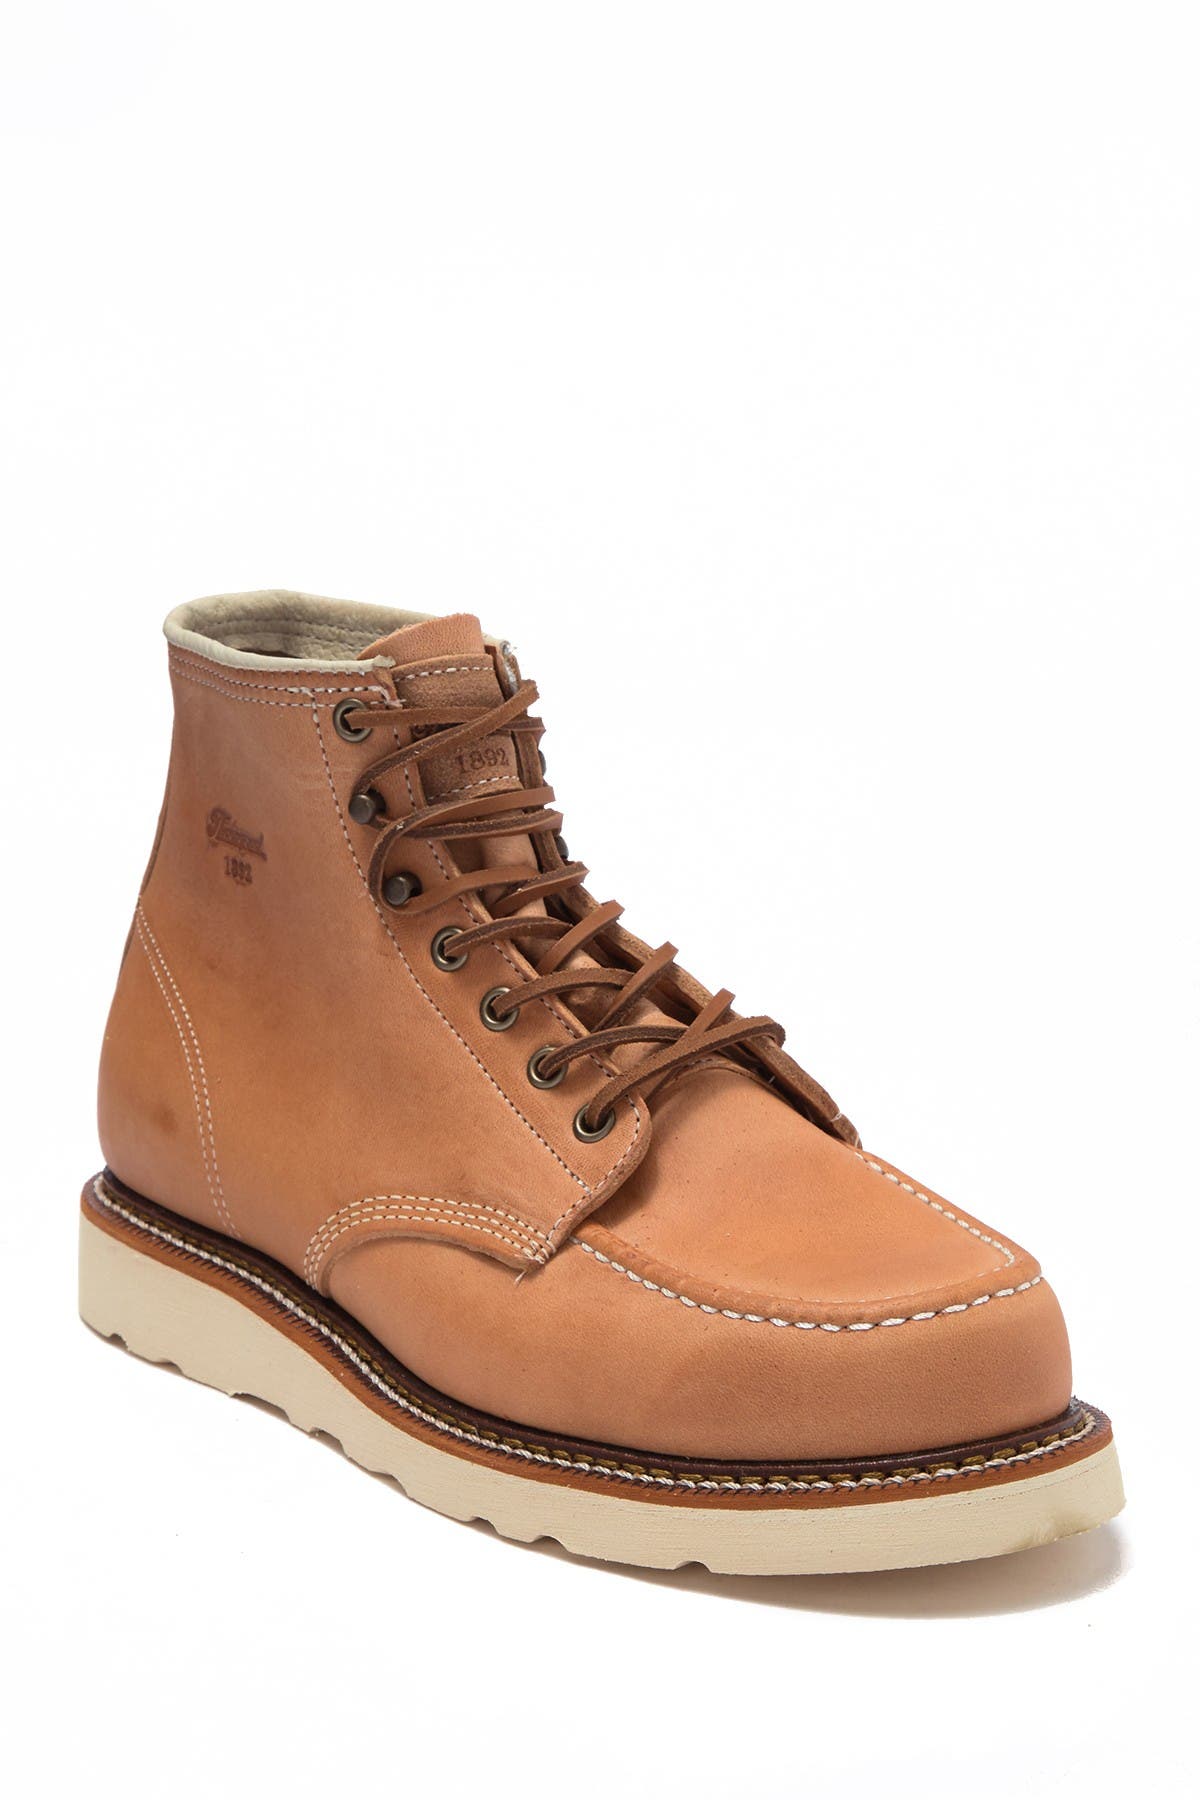 Thorogood | Janesville Leather Boot 